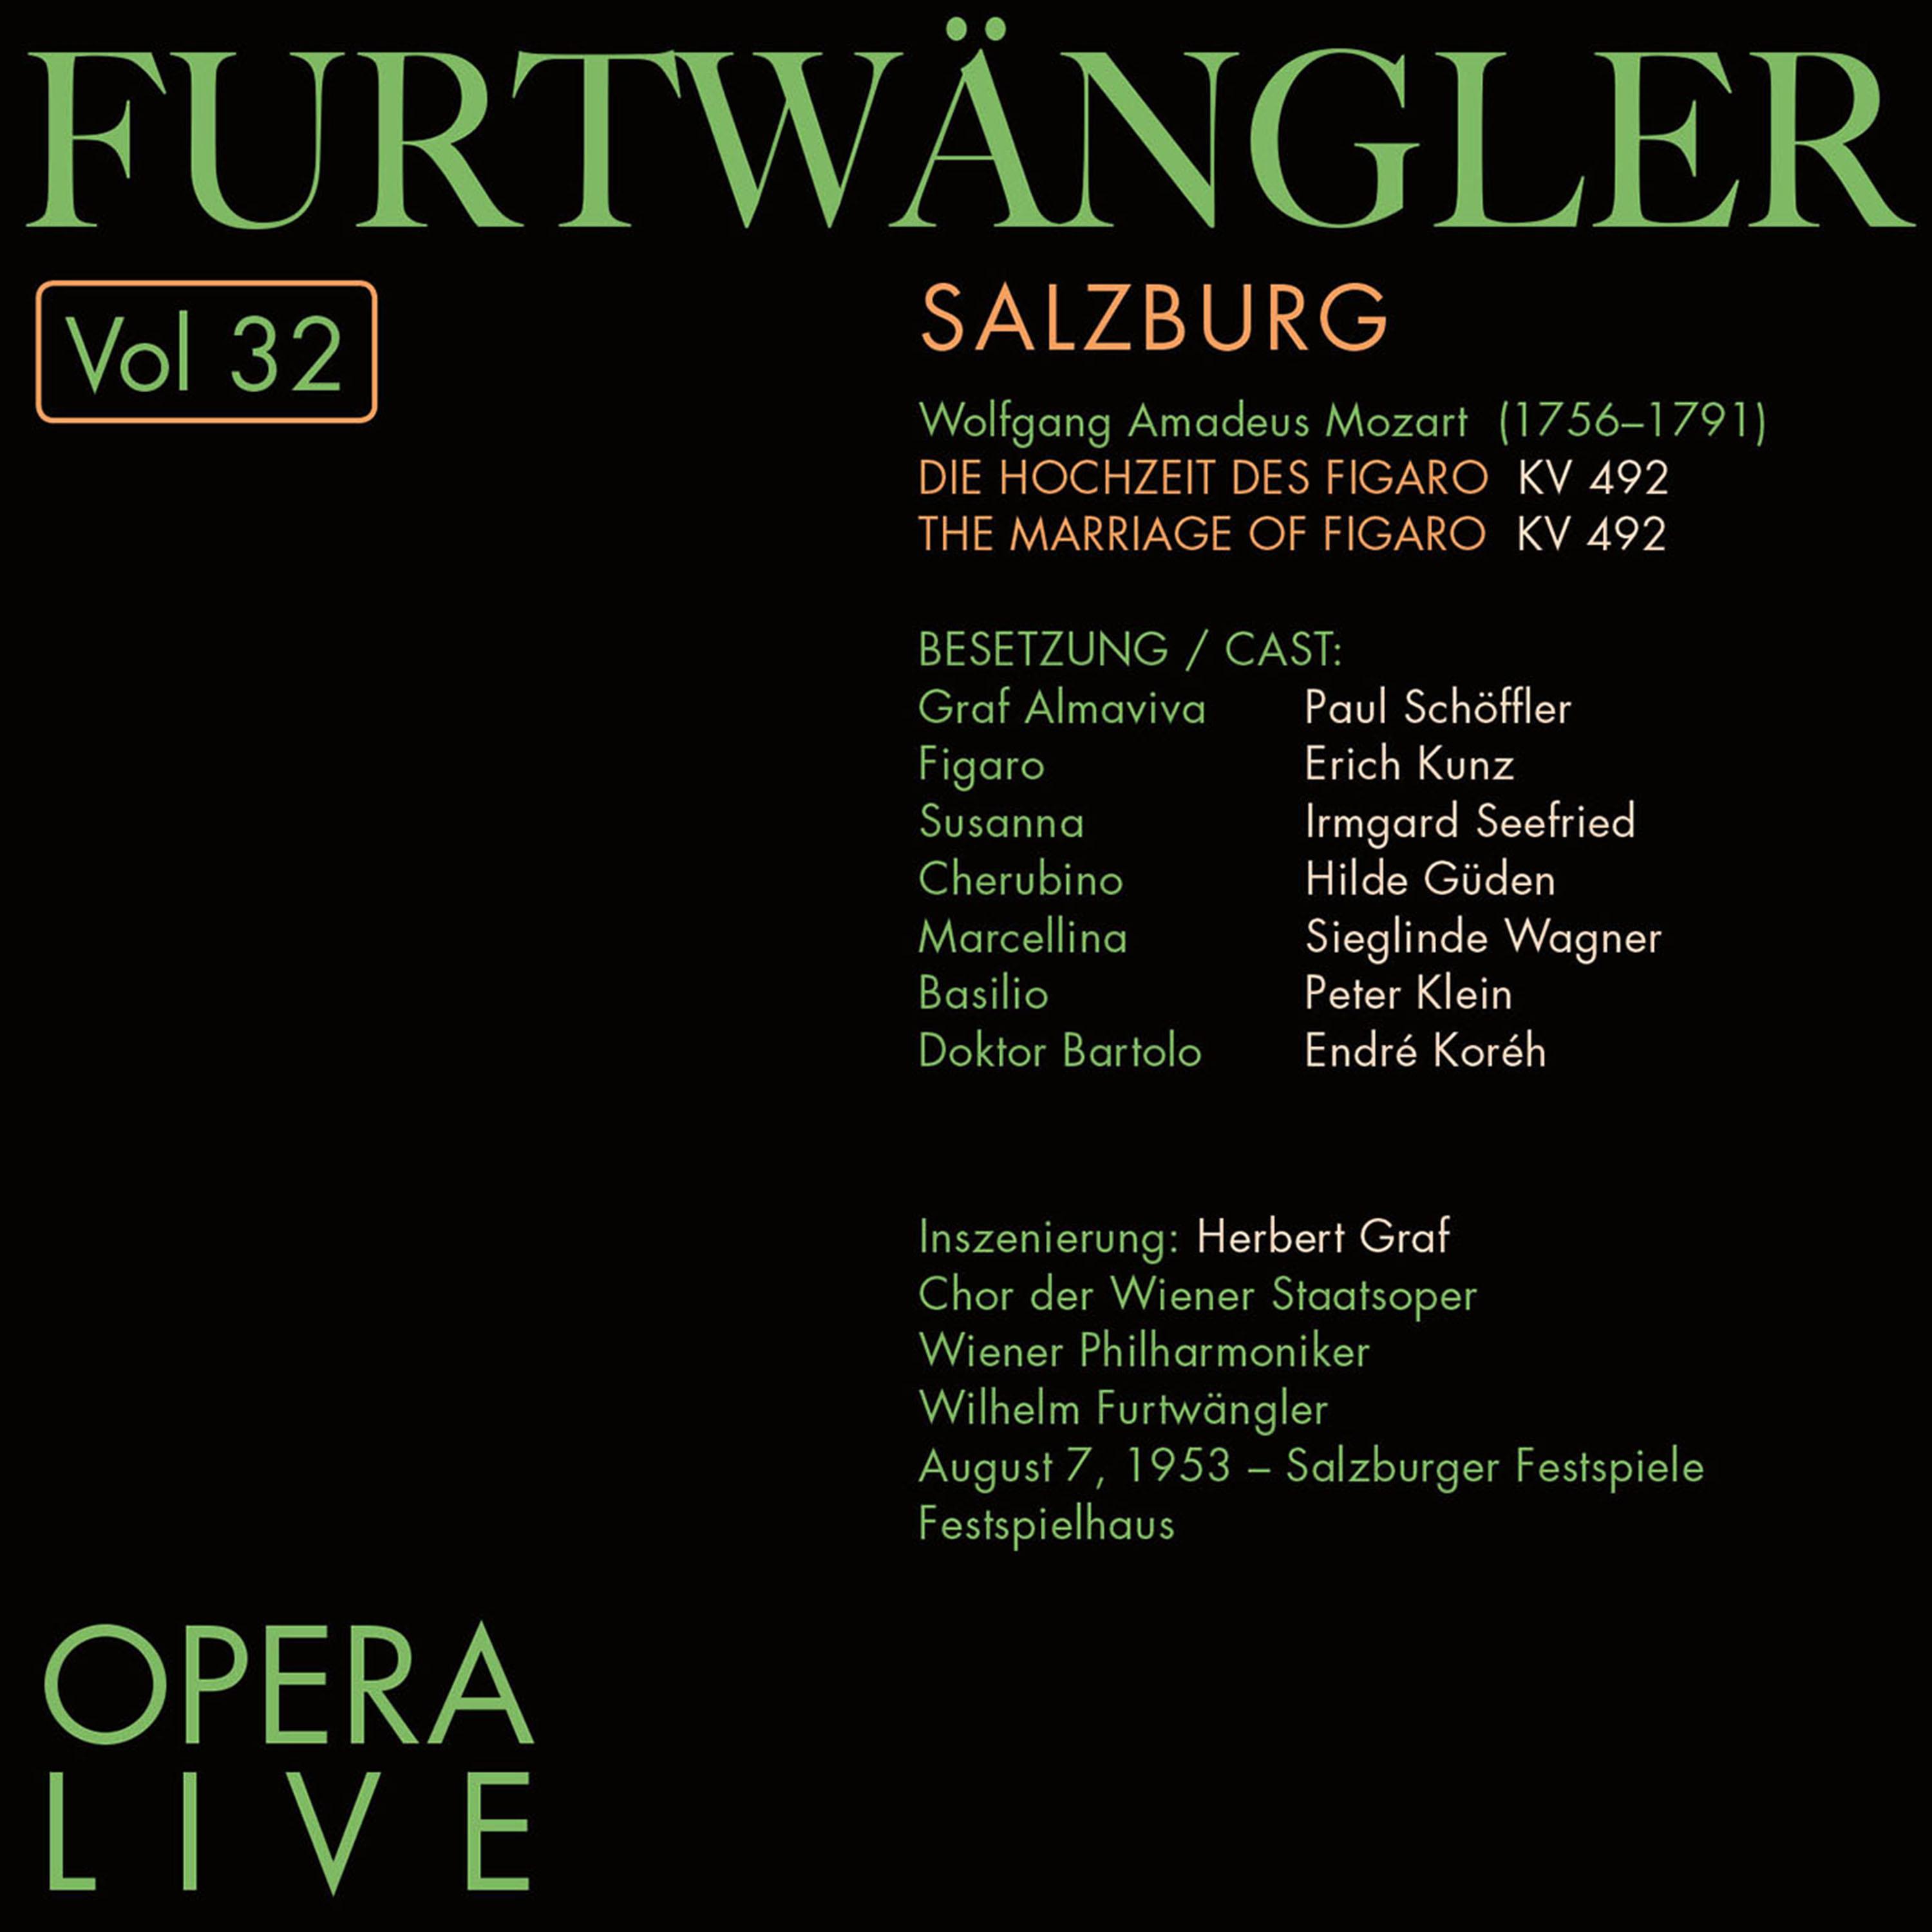 Furtw ngler  Opera Live, Vol. 32